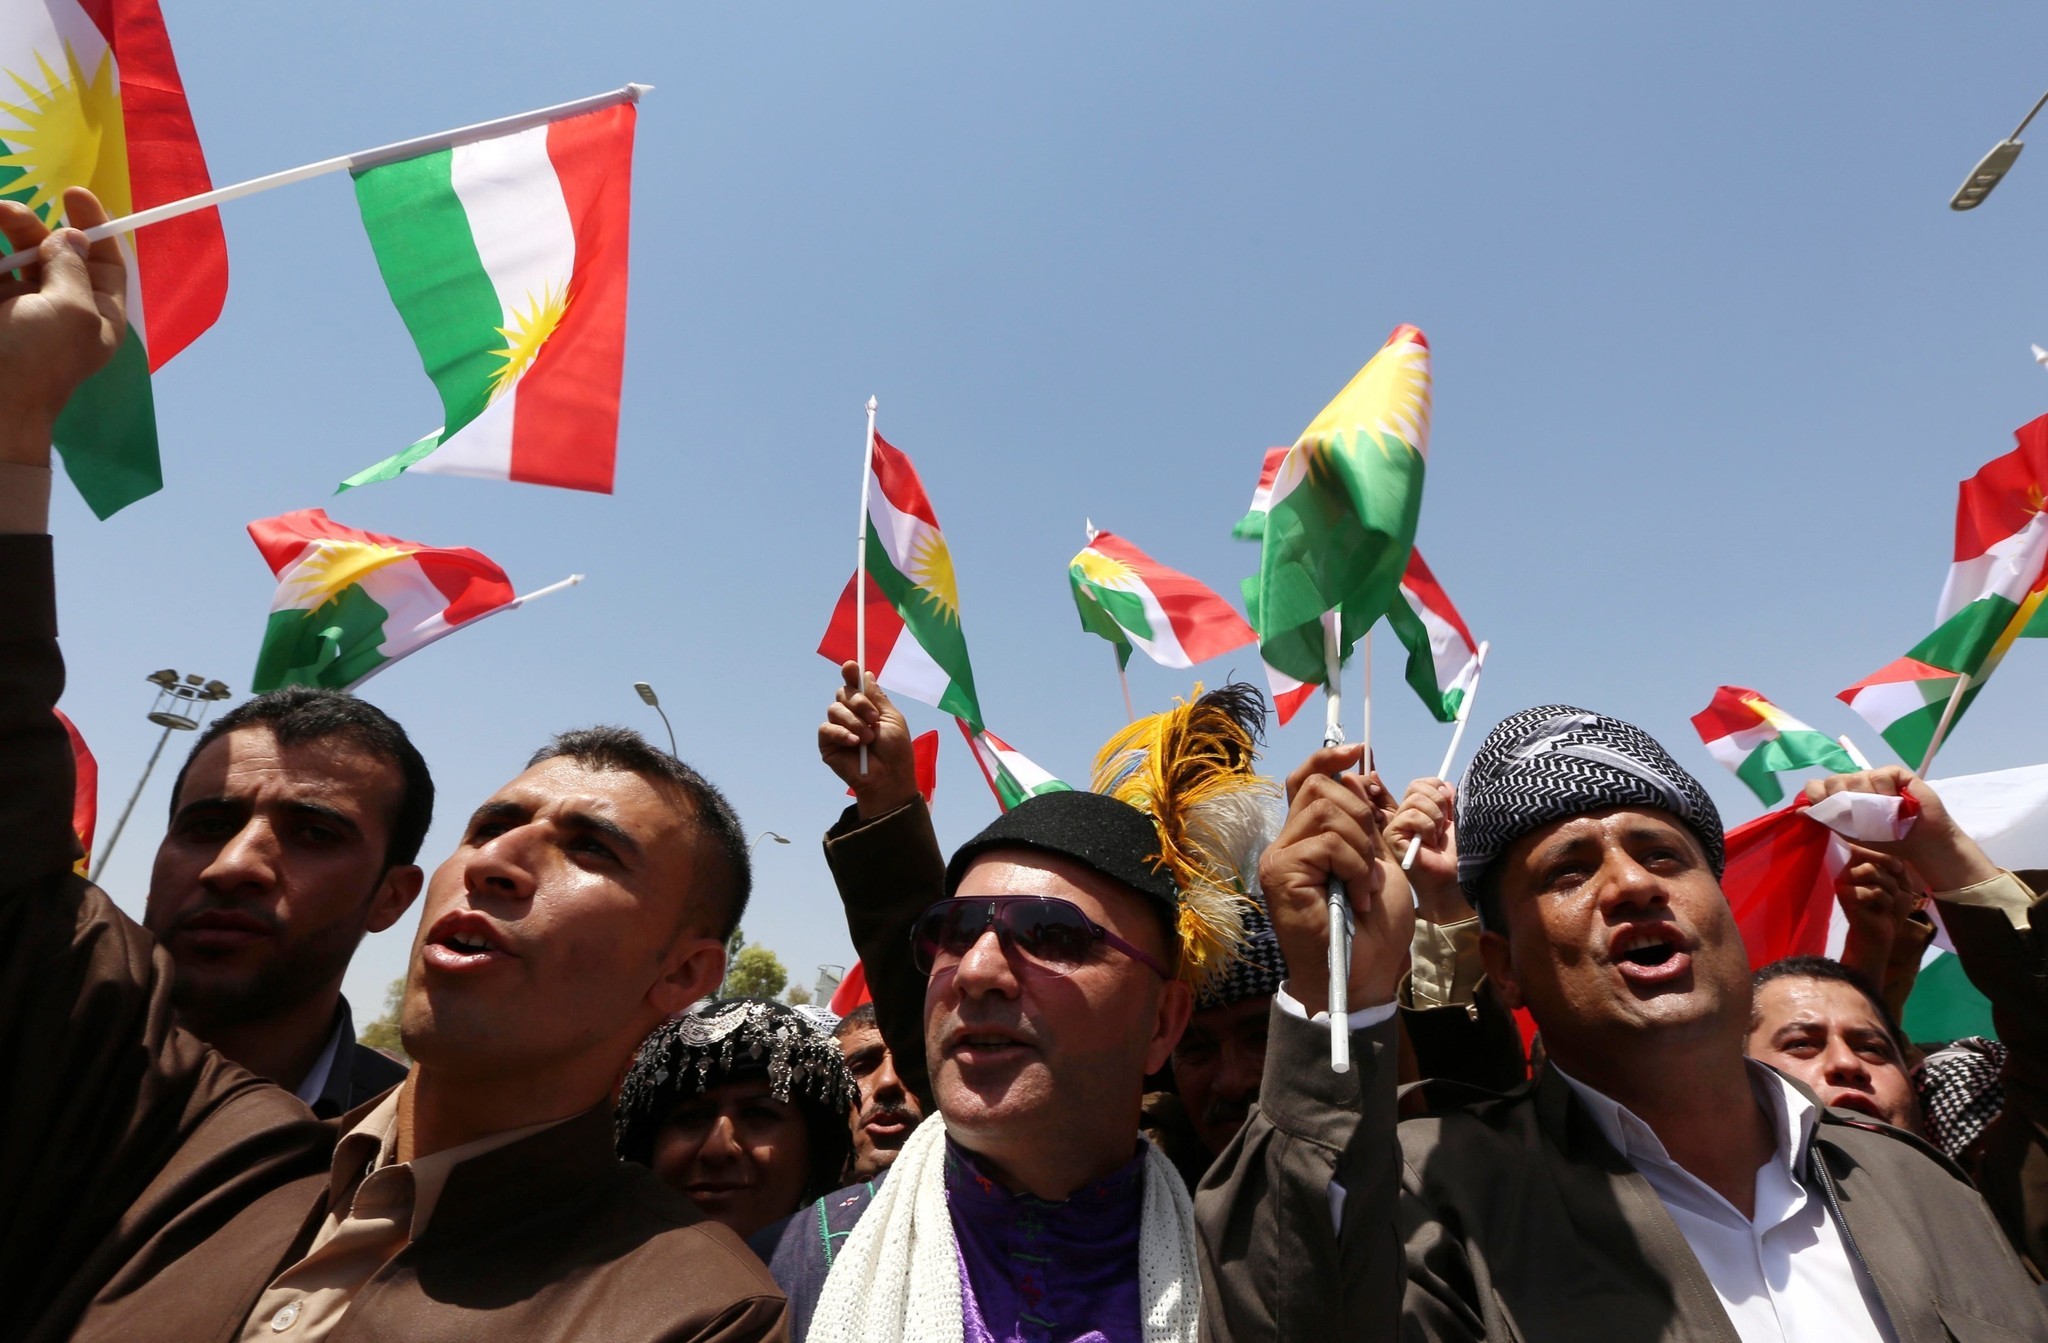 For millions of ethnic Kurds in Iraqi Kurdistan, Monday was a historic day. | Source: Iraqinews.com